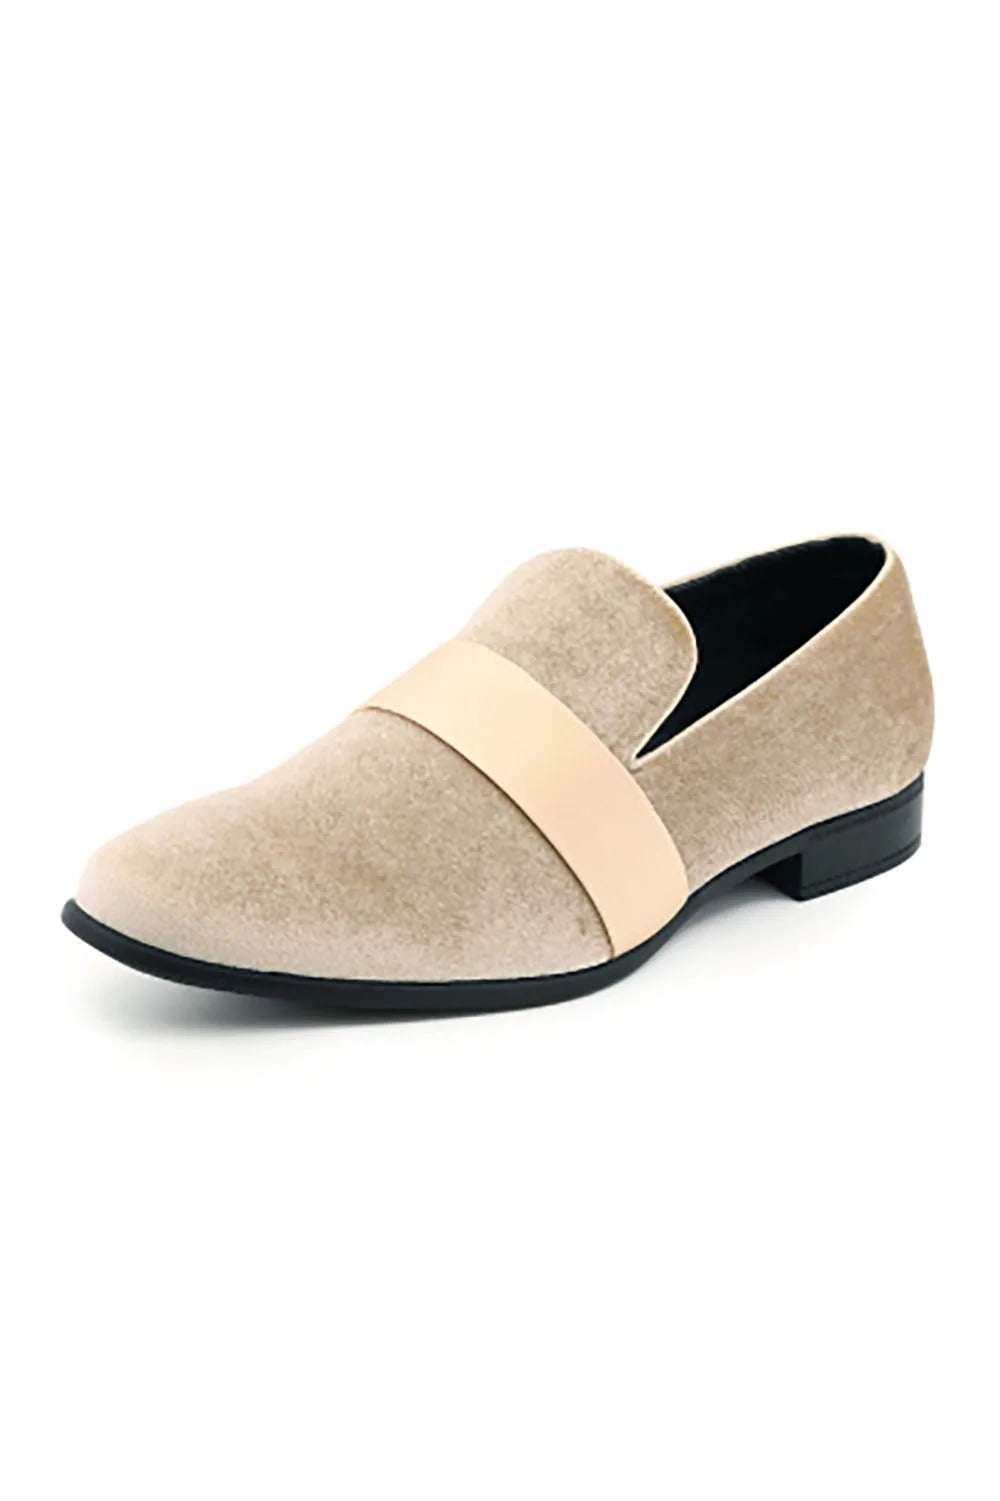 Men's Ivory Dress Shoes - Cream Dress Shoe